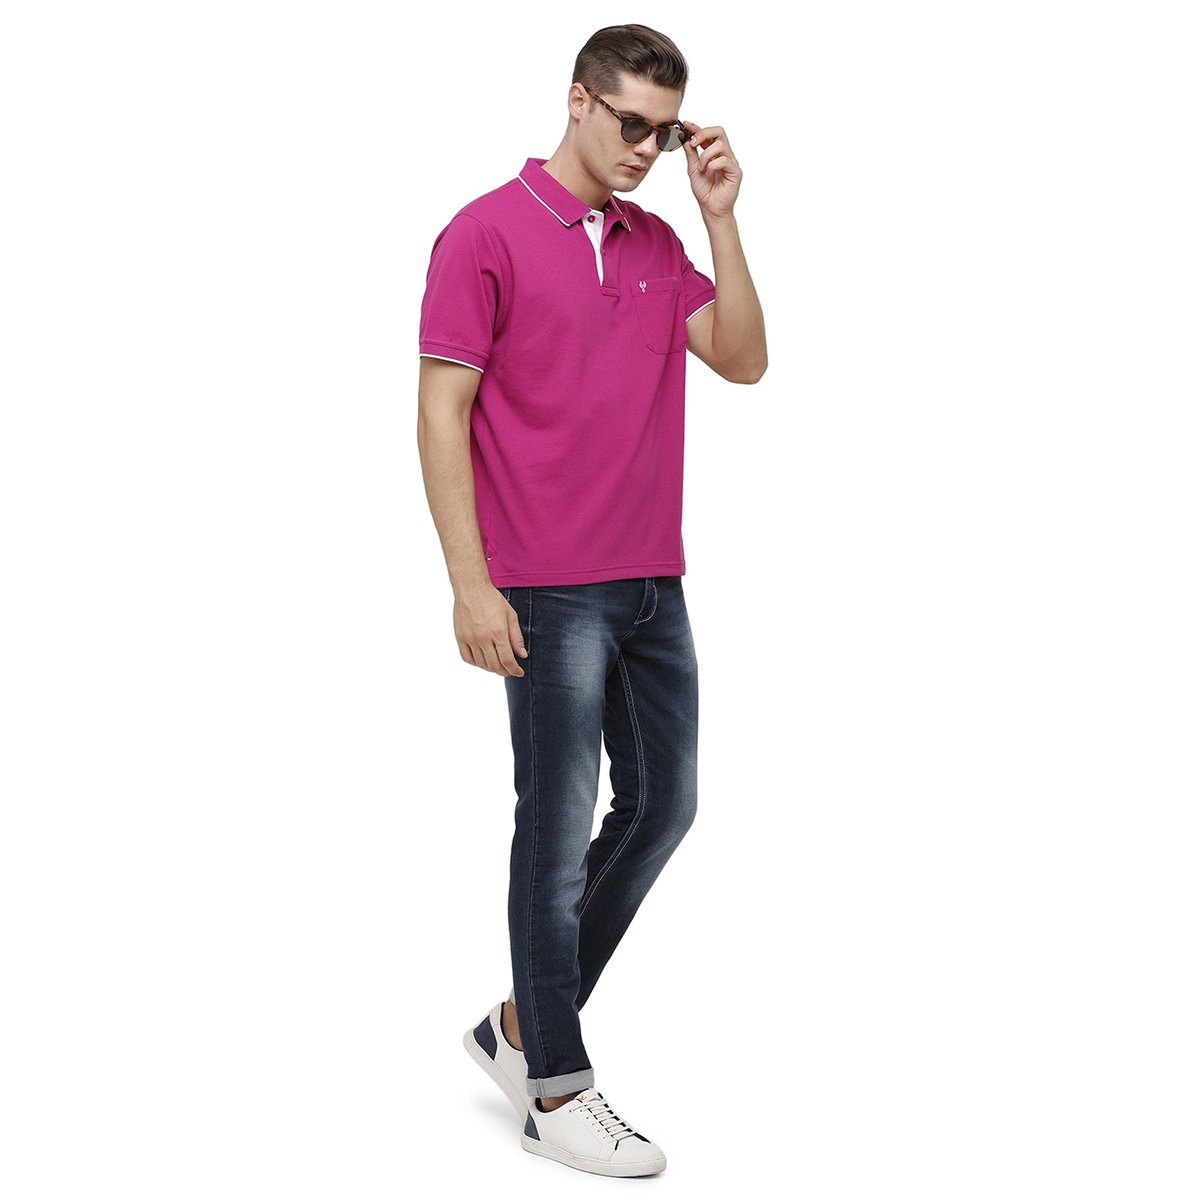 Classic polo Men's Fuchea Pink Smart Double Pique Polo Half Sleeve Authentic Fit T-Shirt Nova - Fuchea T-shirt Classic Polo 